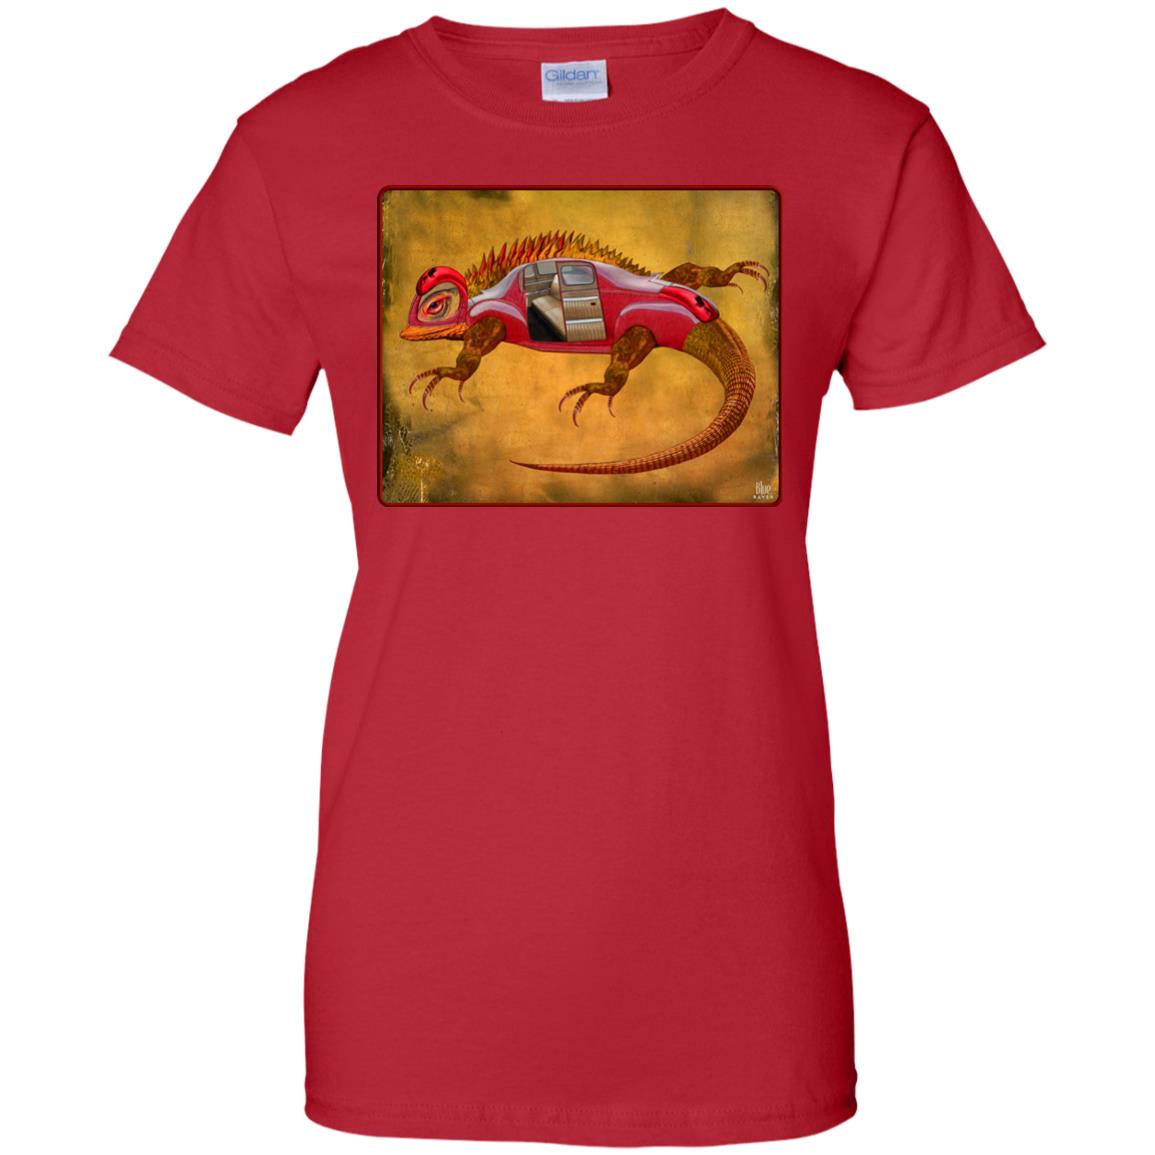 Uber Lizard - red - Women's Relaxed Fit T-Shirt